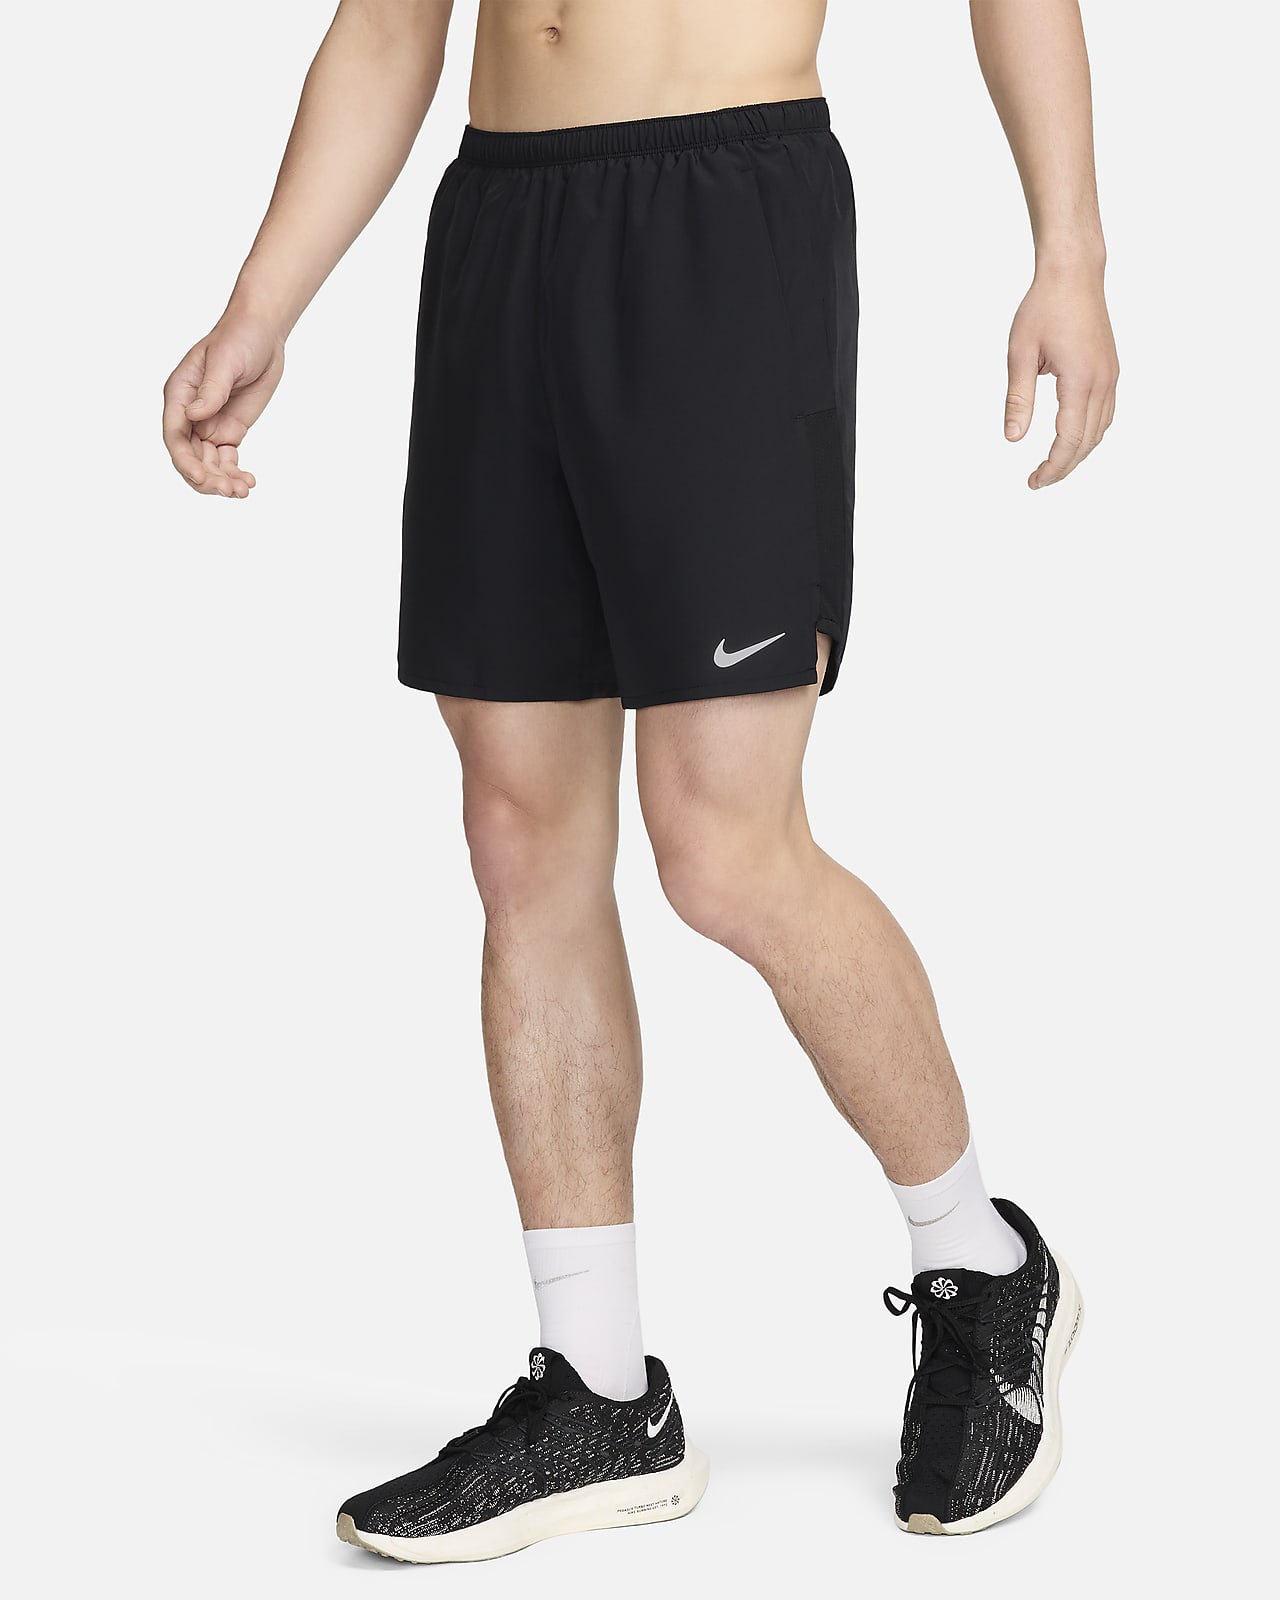 nike running challenger shorts